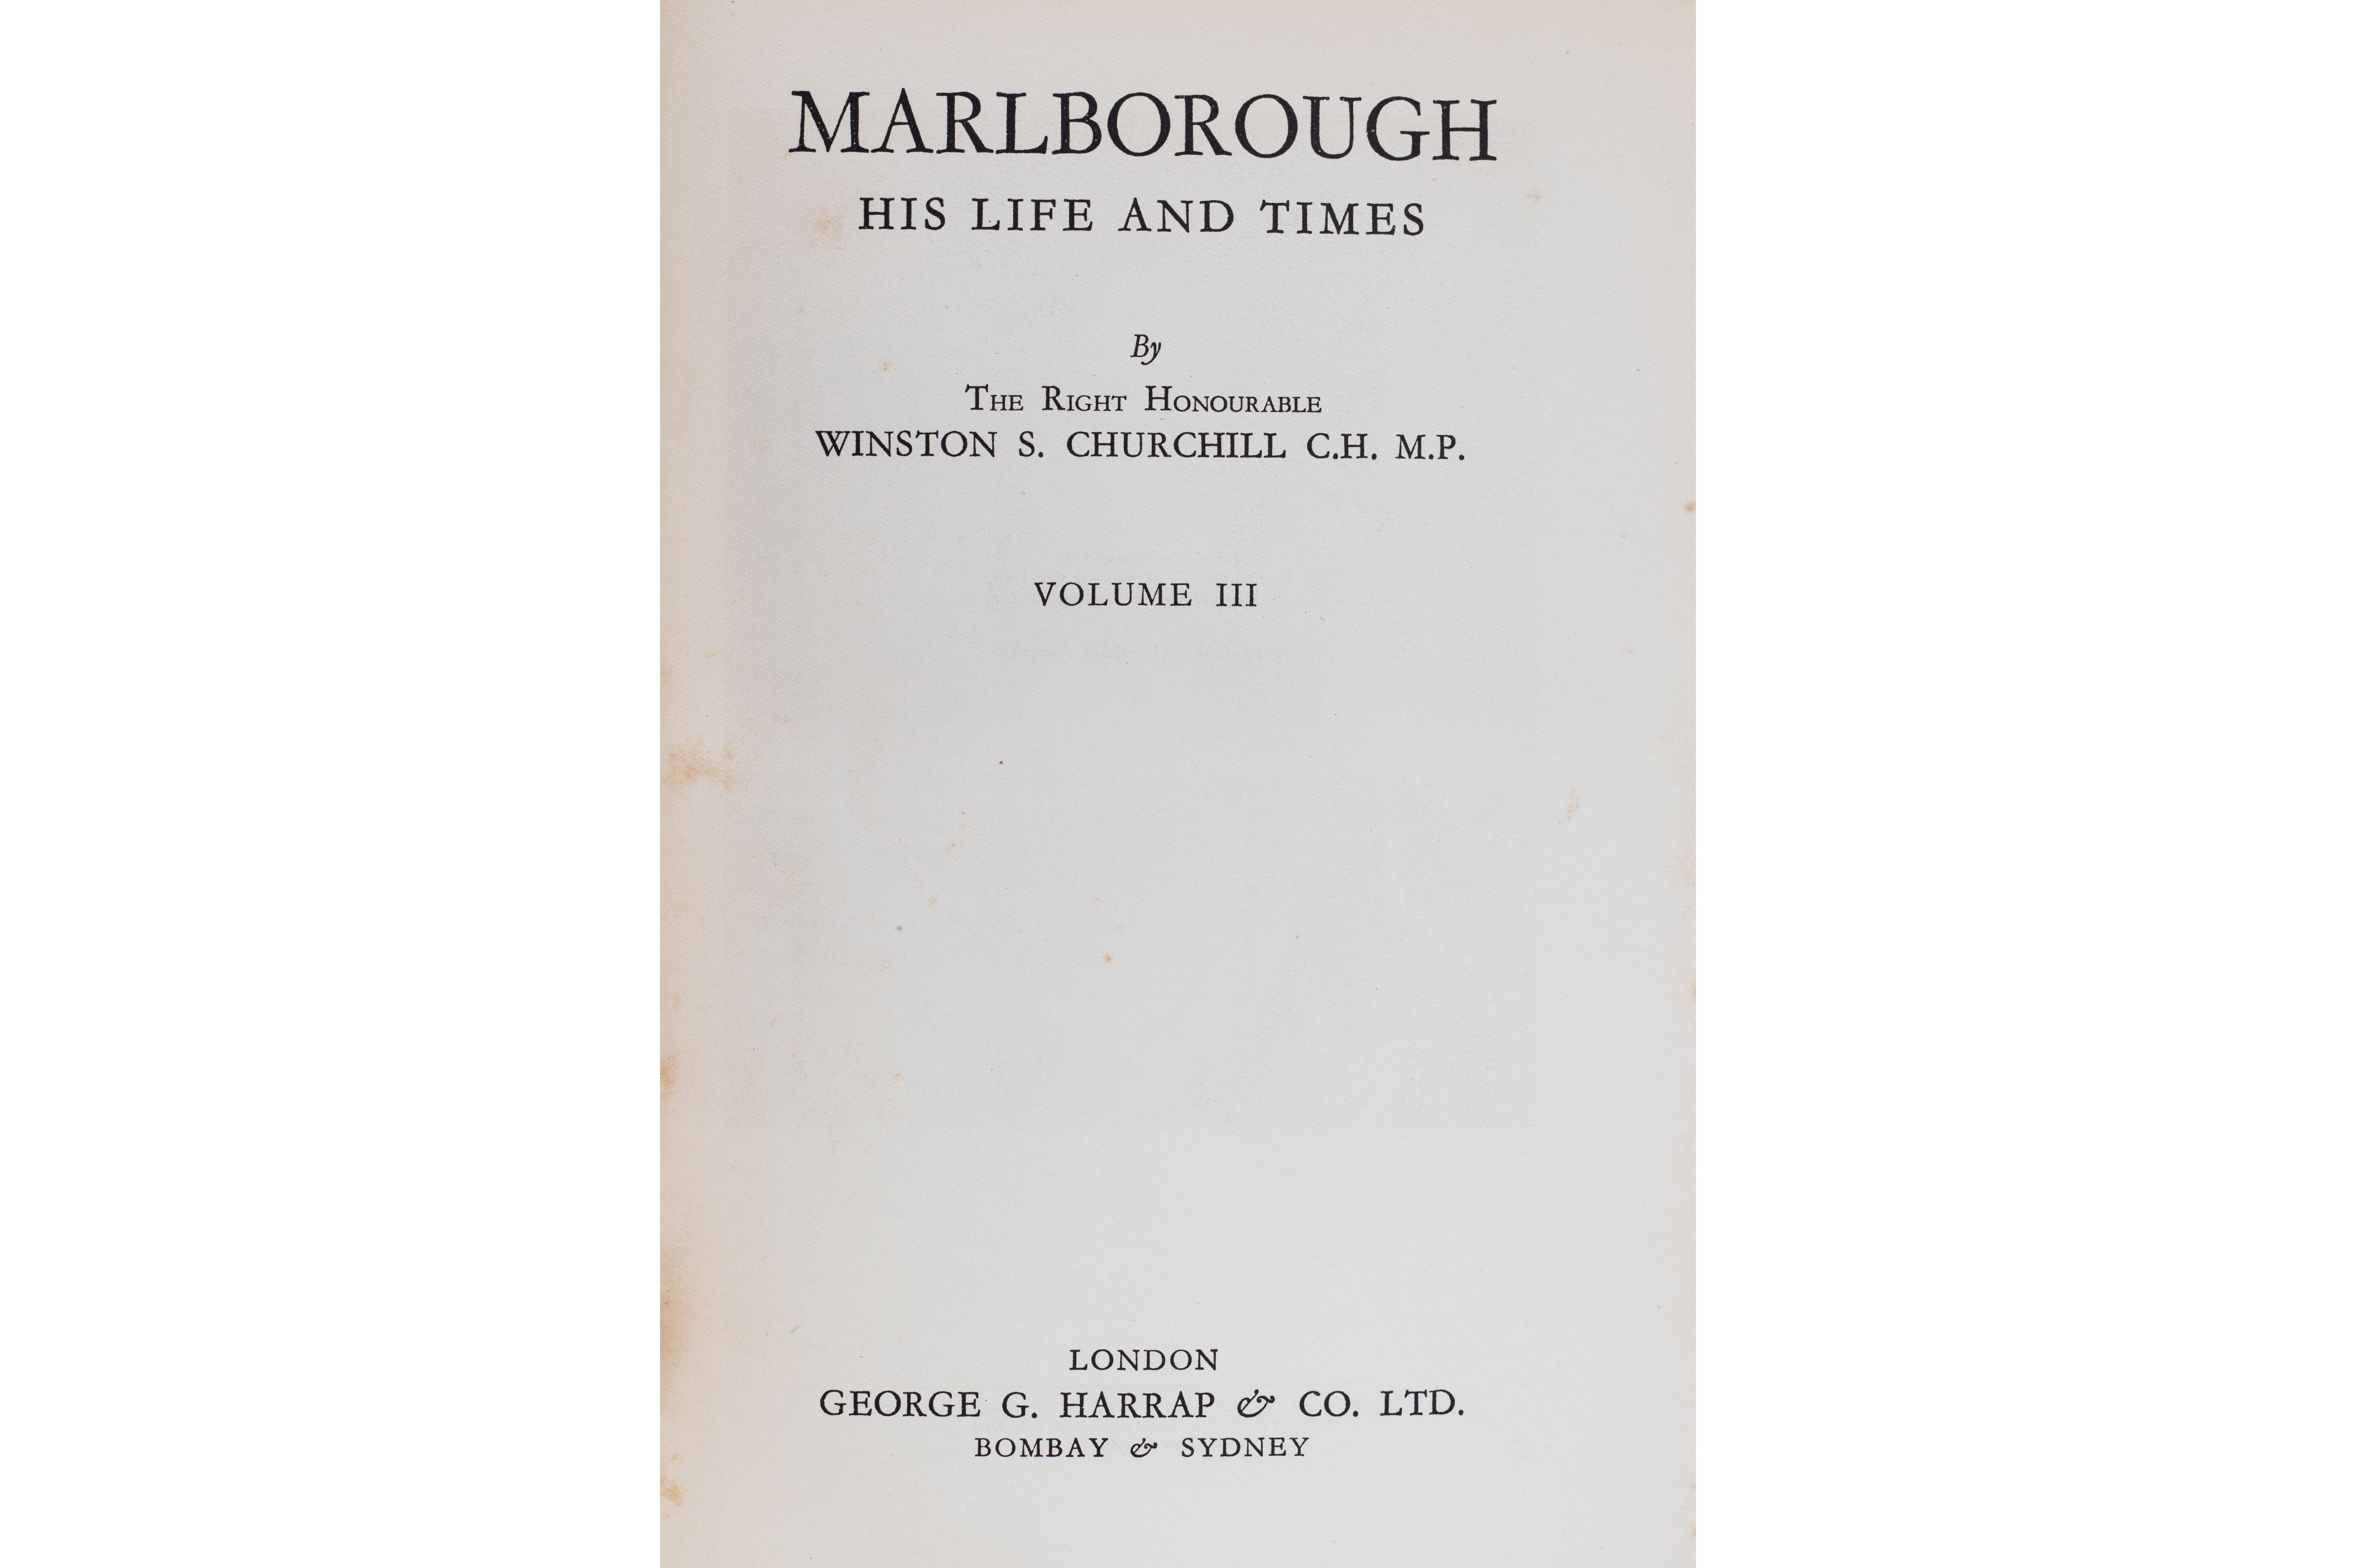 WINSTON CHURCHILL-'MARLBOROUGH: HIS LIFE AND TIMES' (I - IV) - Image 6 of 10